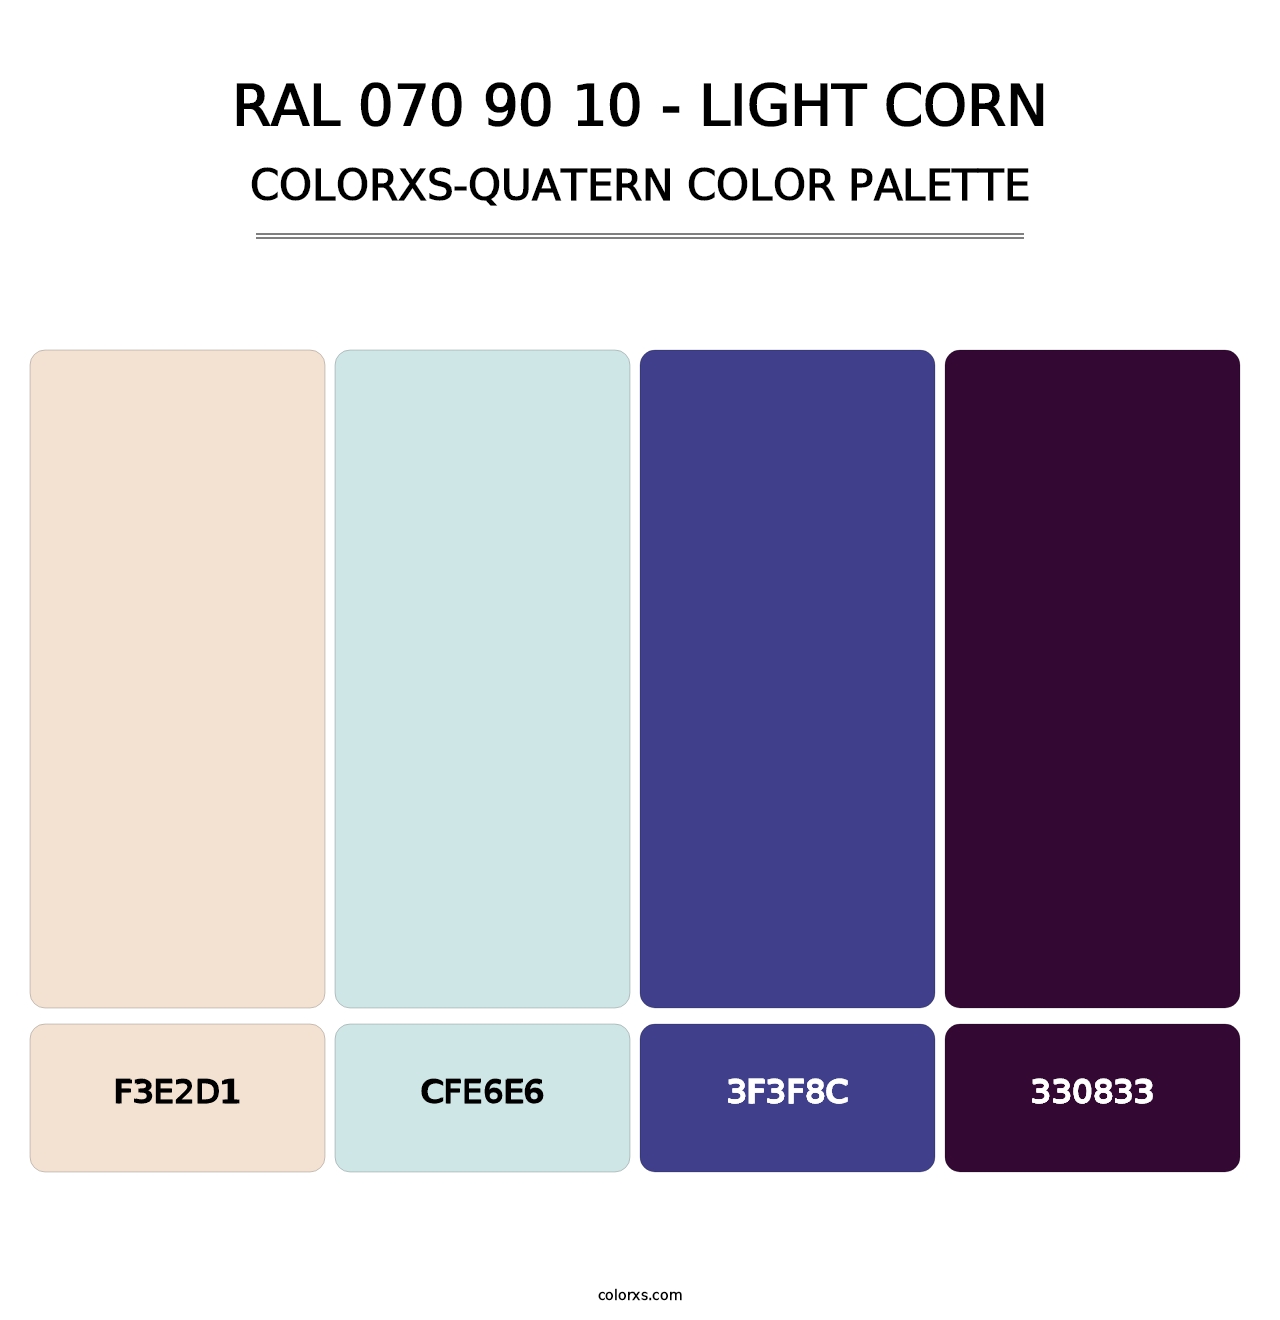 RAL 070 90 10 - Light Corn - Colorxs Quatern Palette